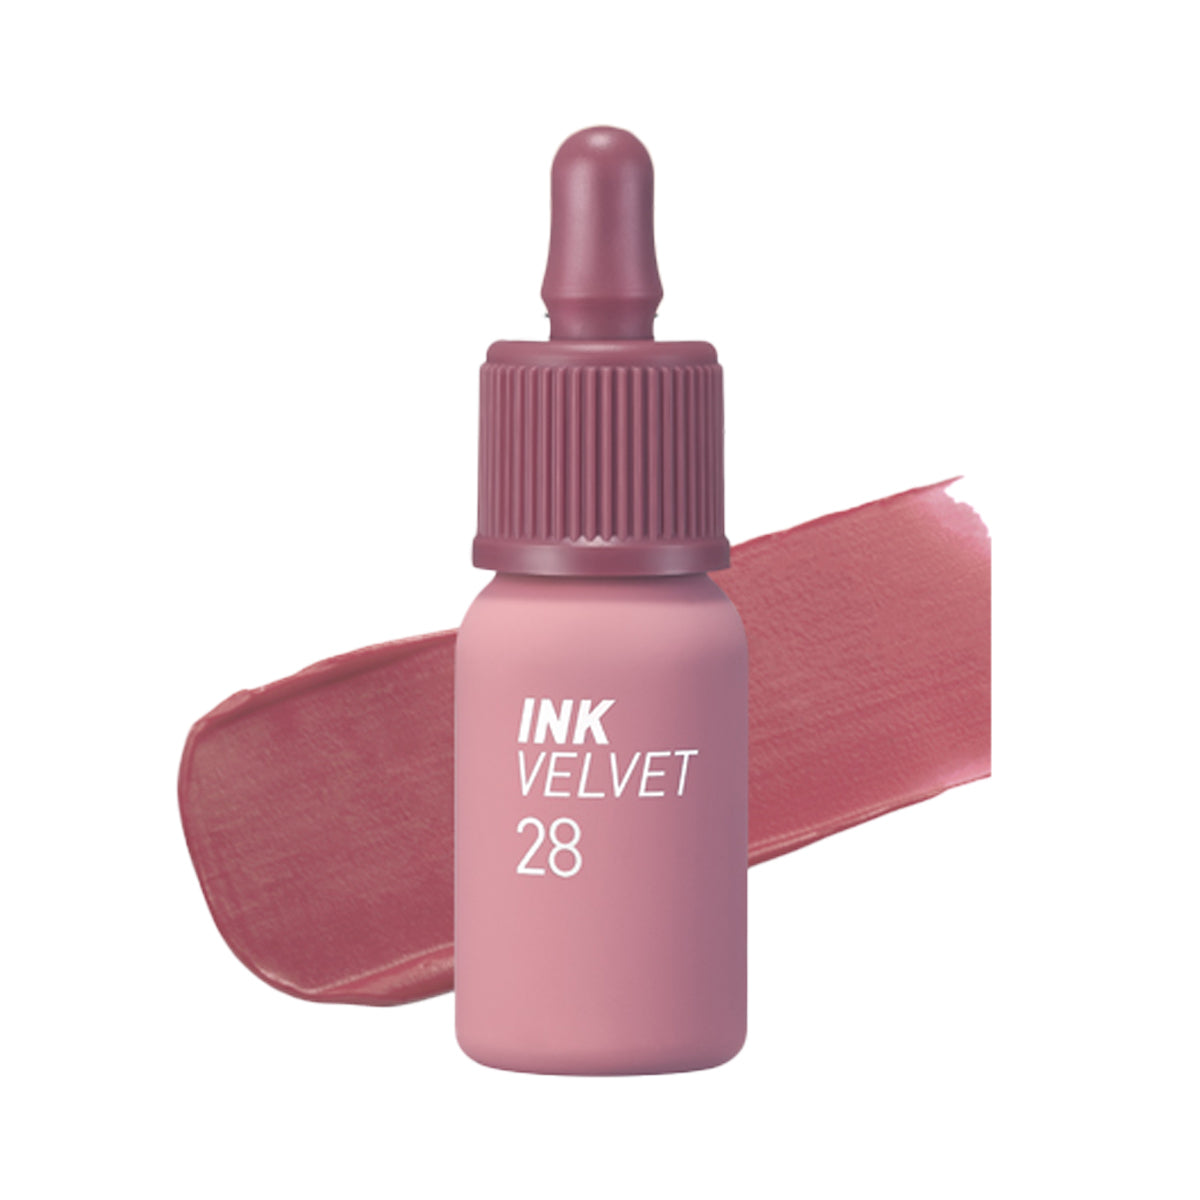 Ink Velvet [#28 Mauveful Nude]